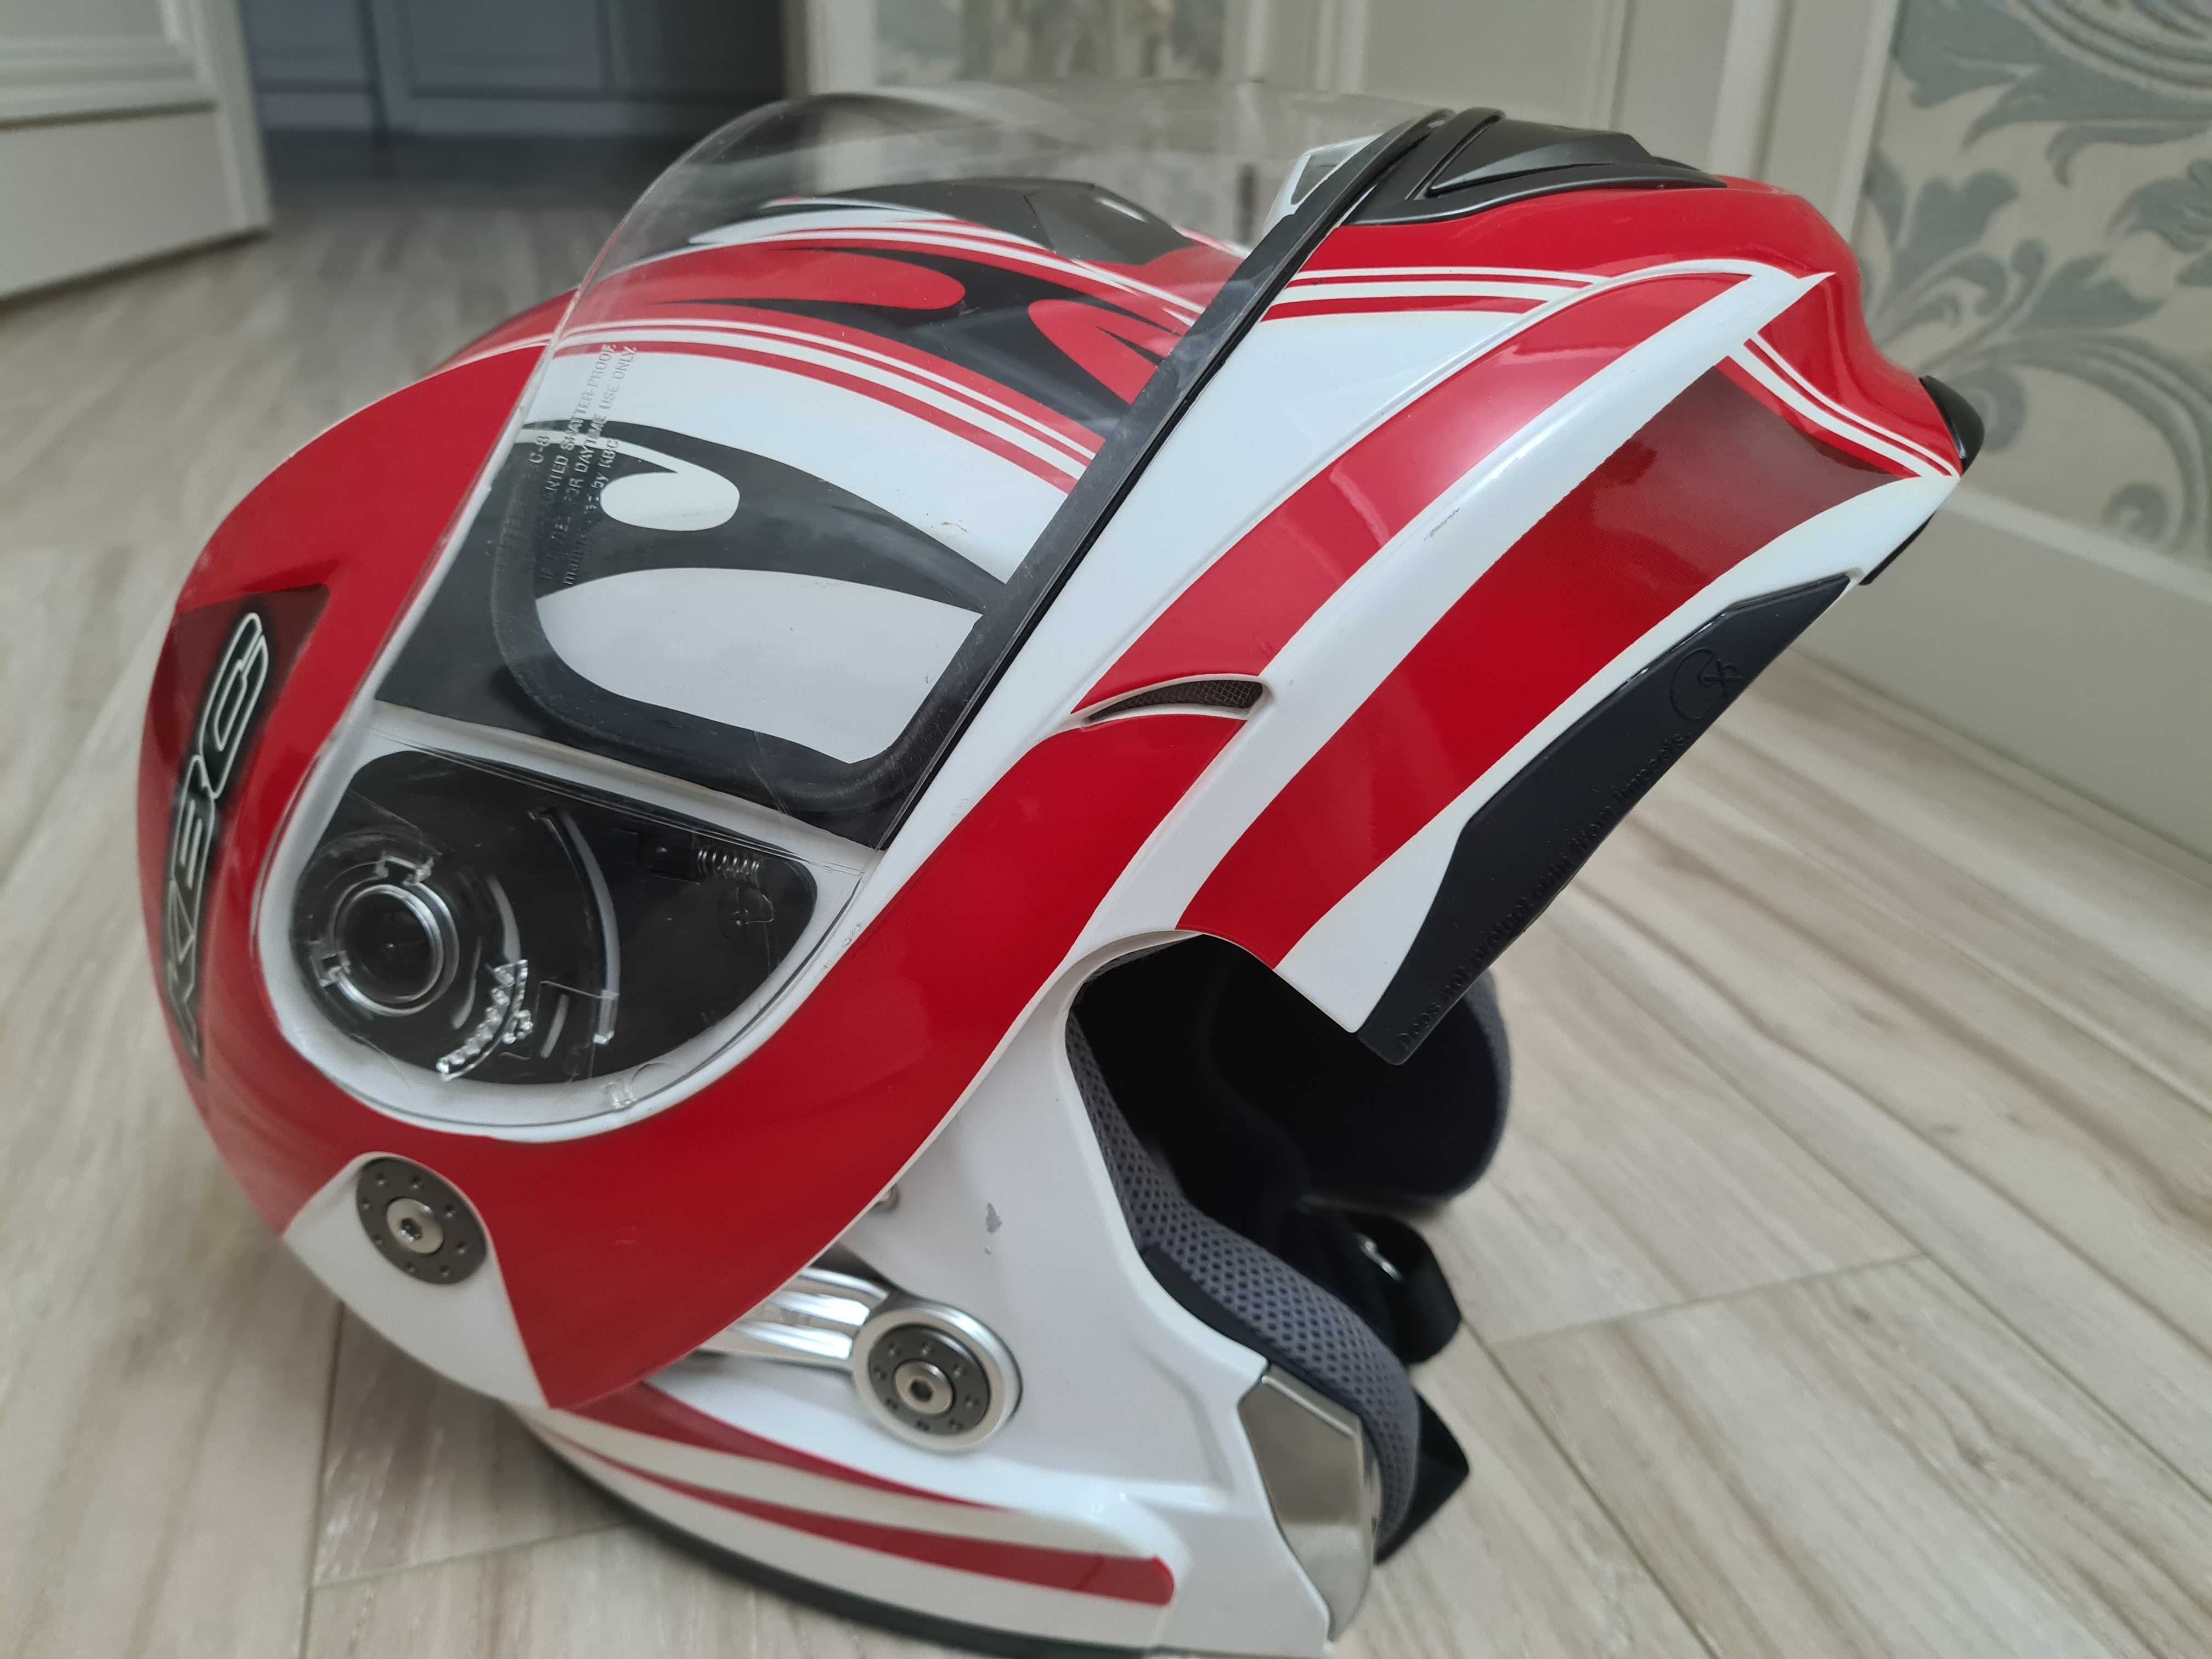 Шлем мотоциклетный KBC FFR CRUZE